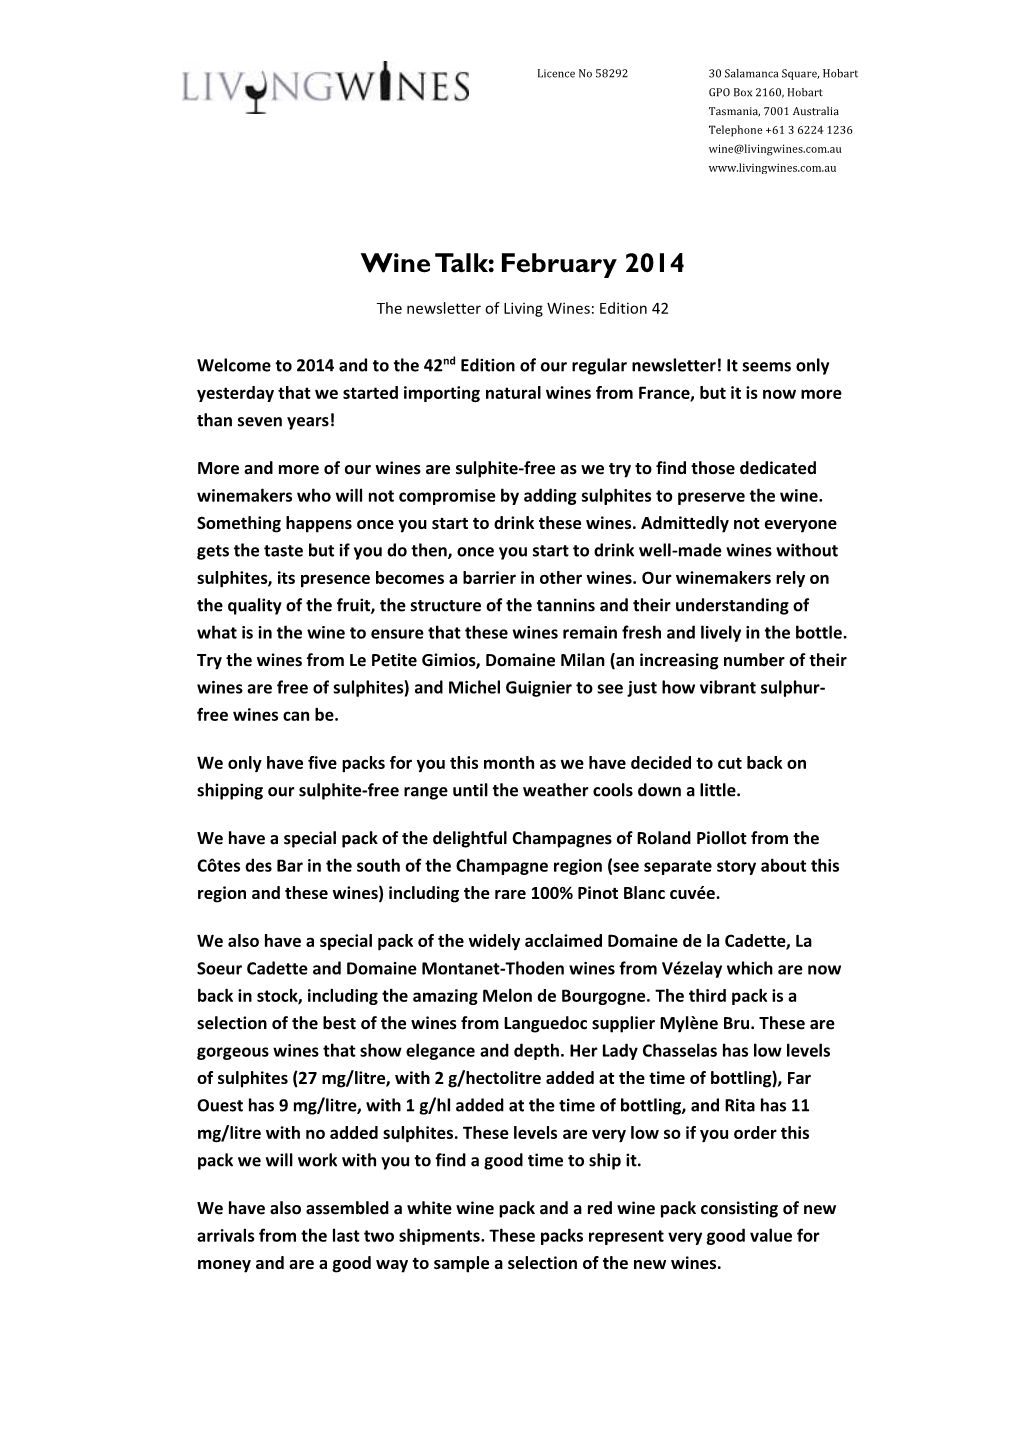 Wine Talk 42 February 2014